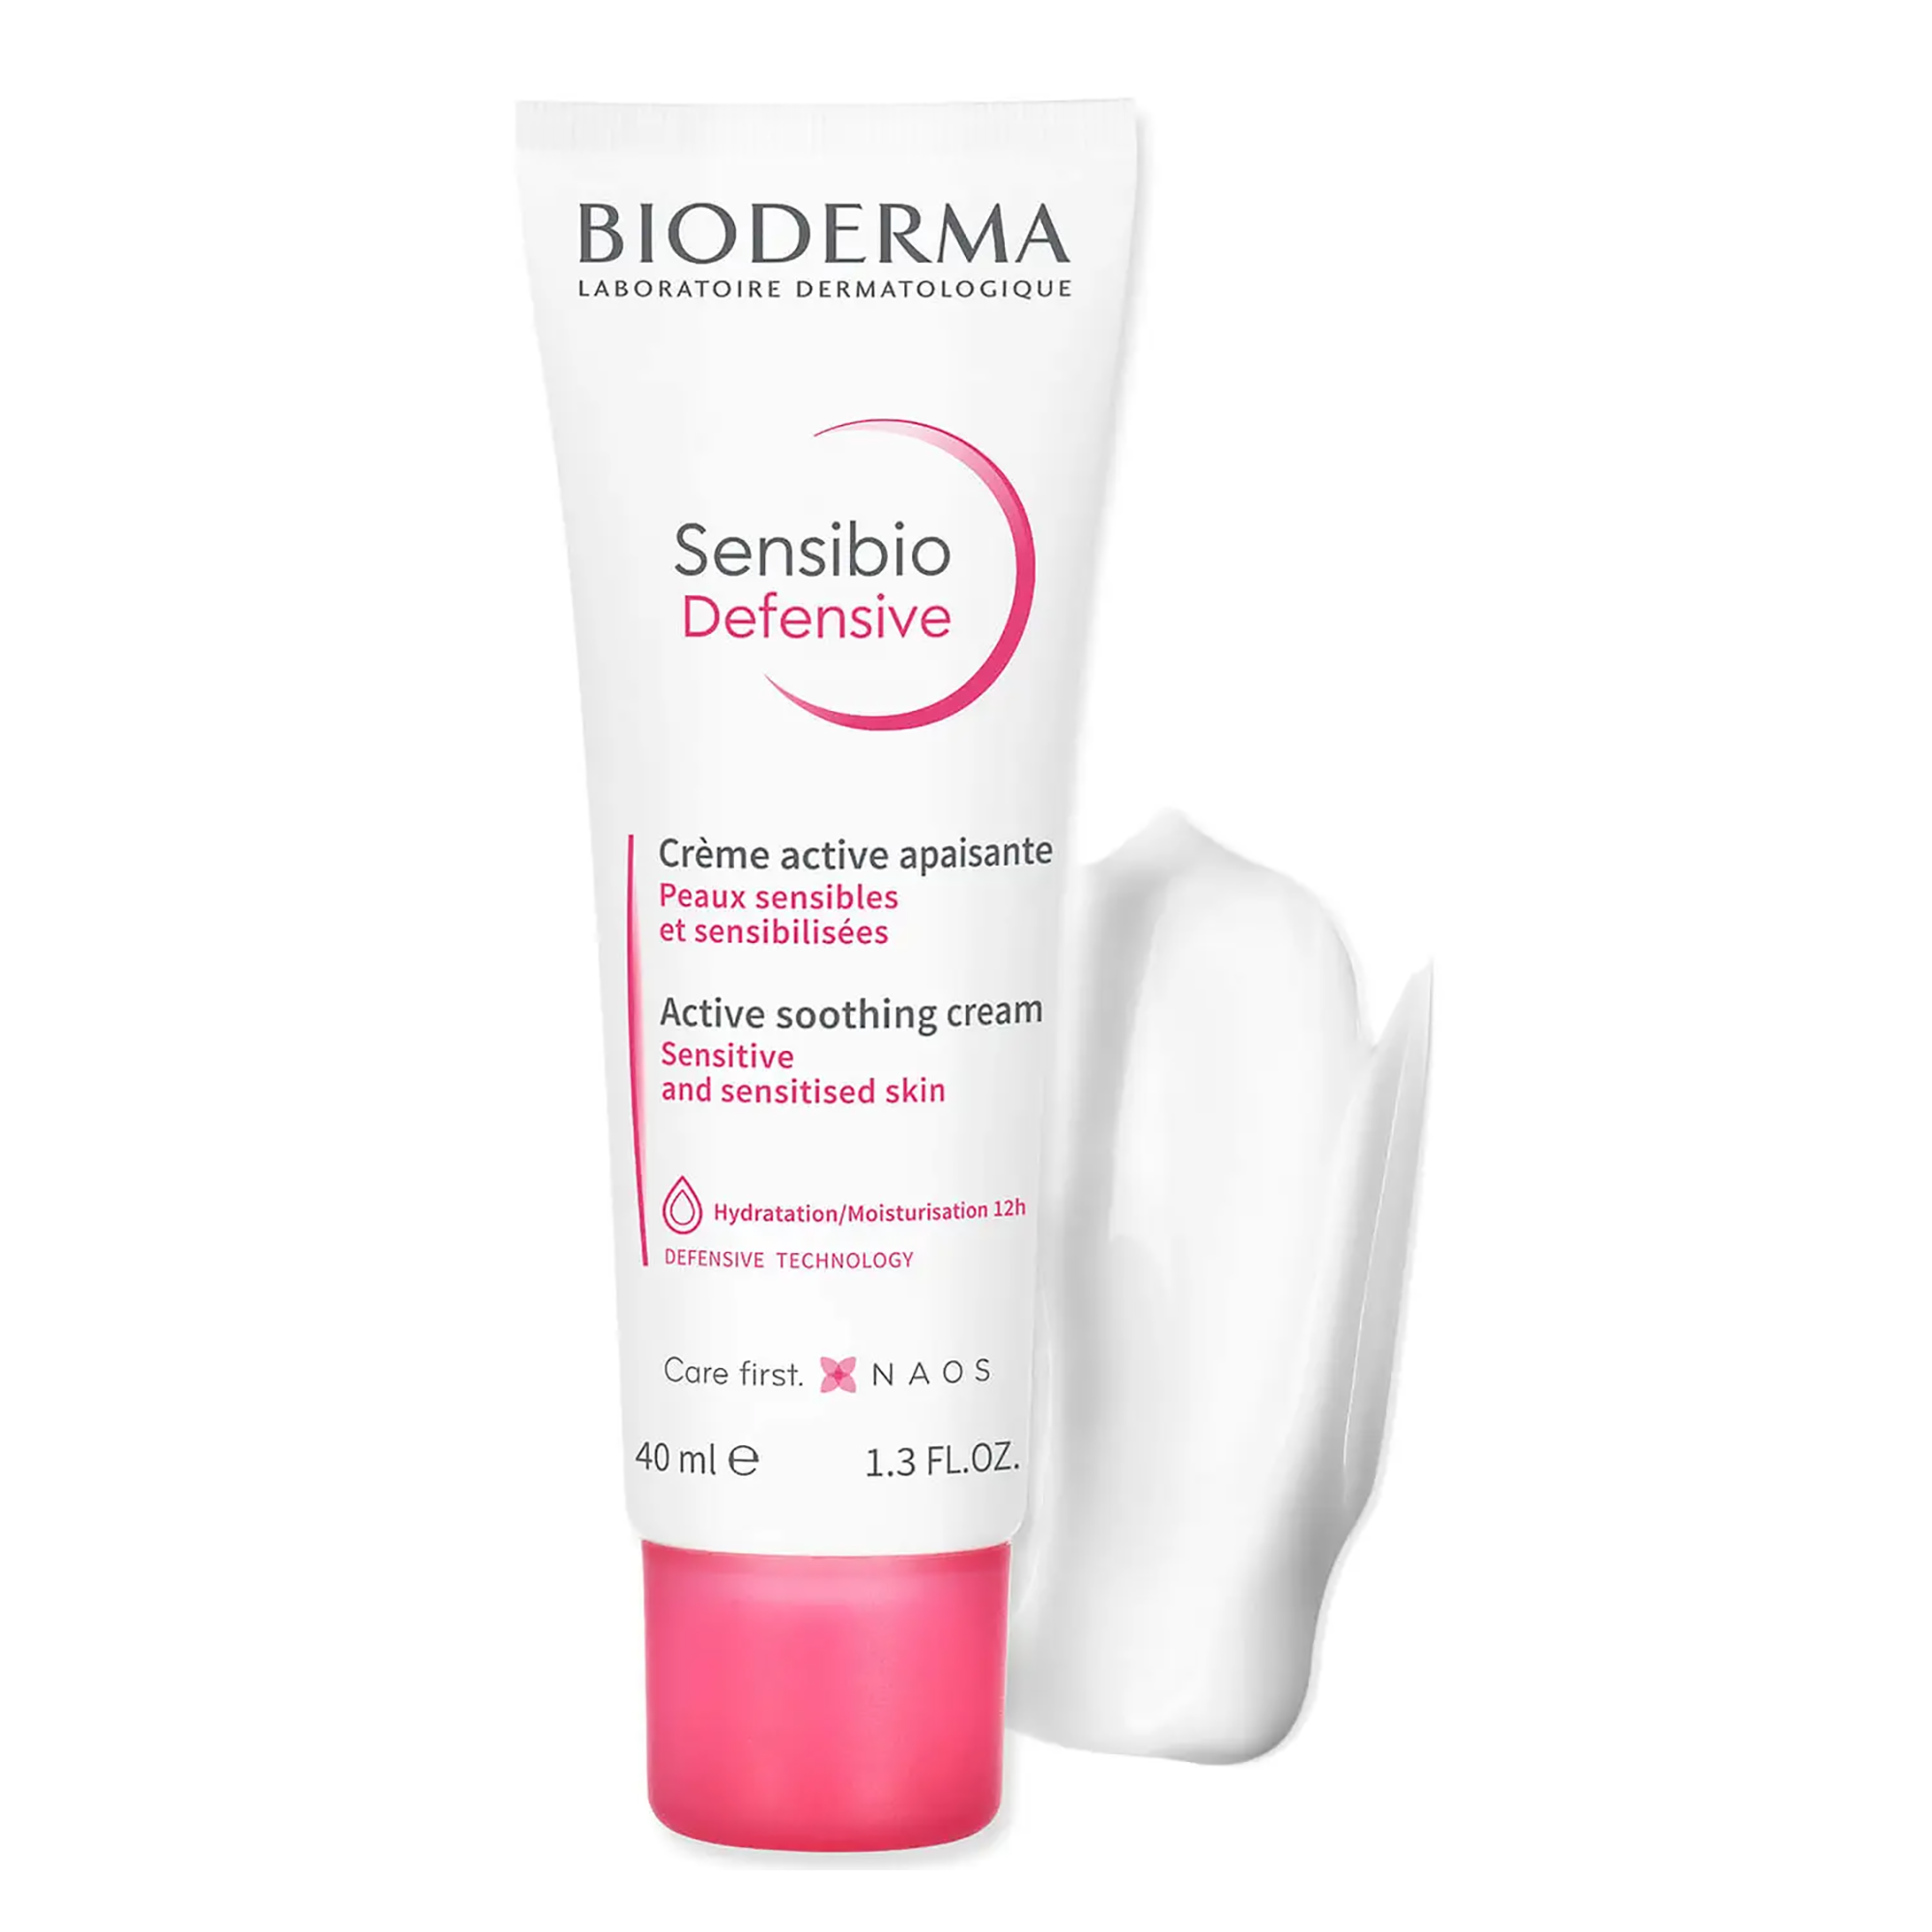 Bioderma Sensibio Defensive Cream - 1.3 fl oz / 1.3OZ